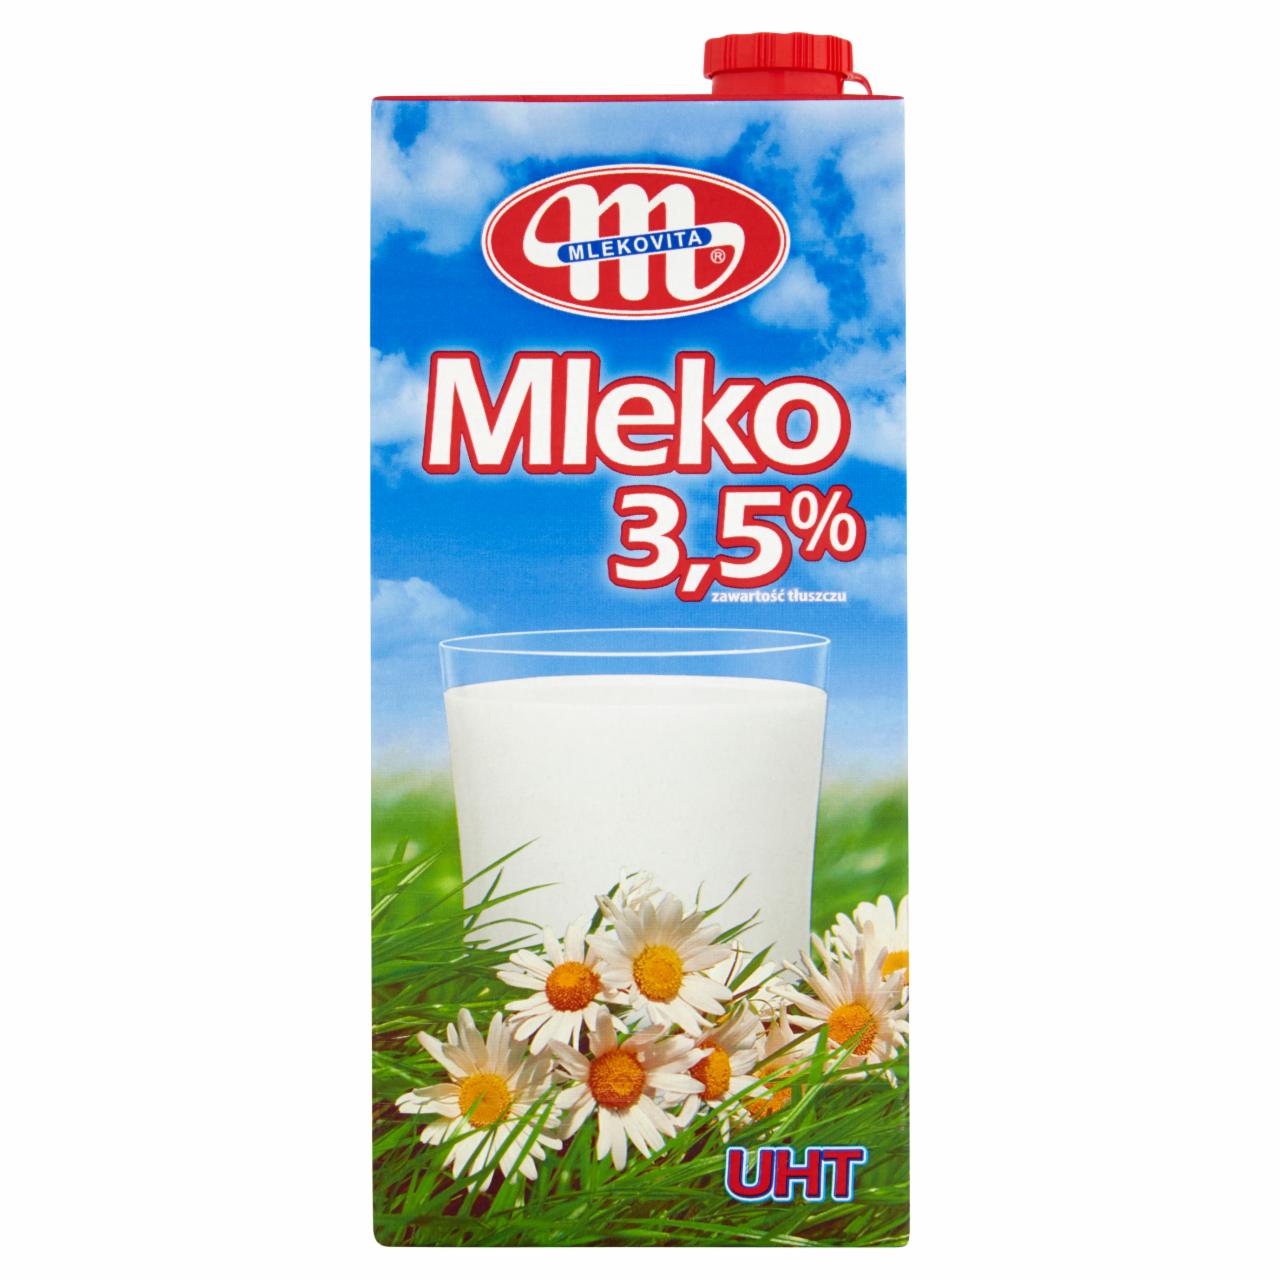 Zdjęcia - Mlekovita Mleko UHT 3,5% 1 l